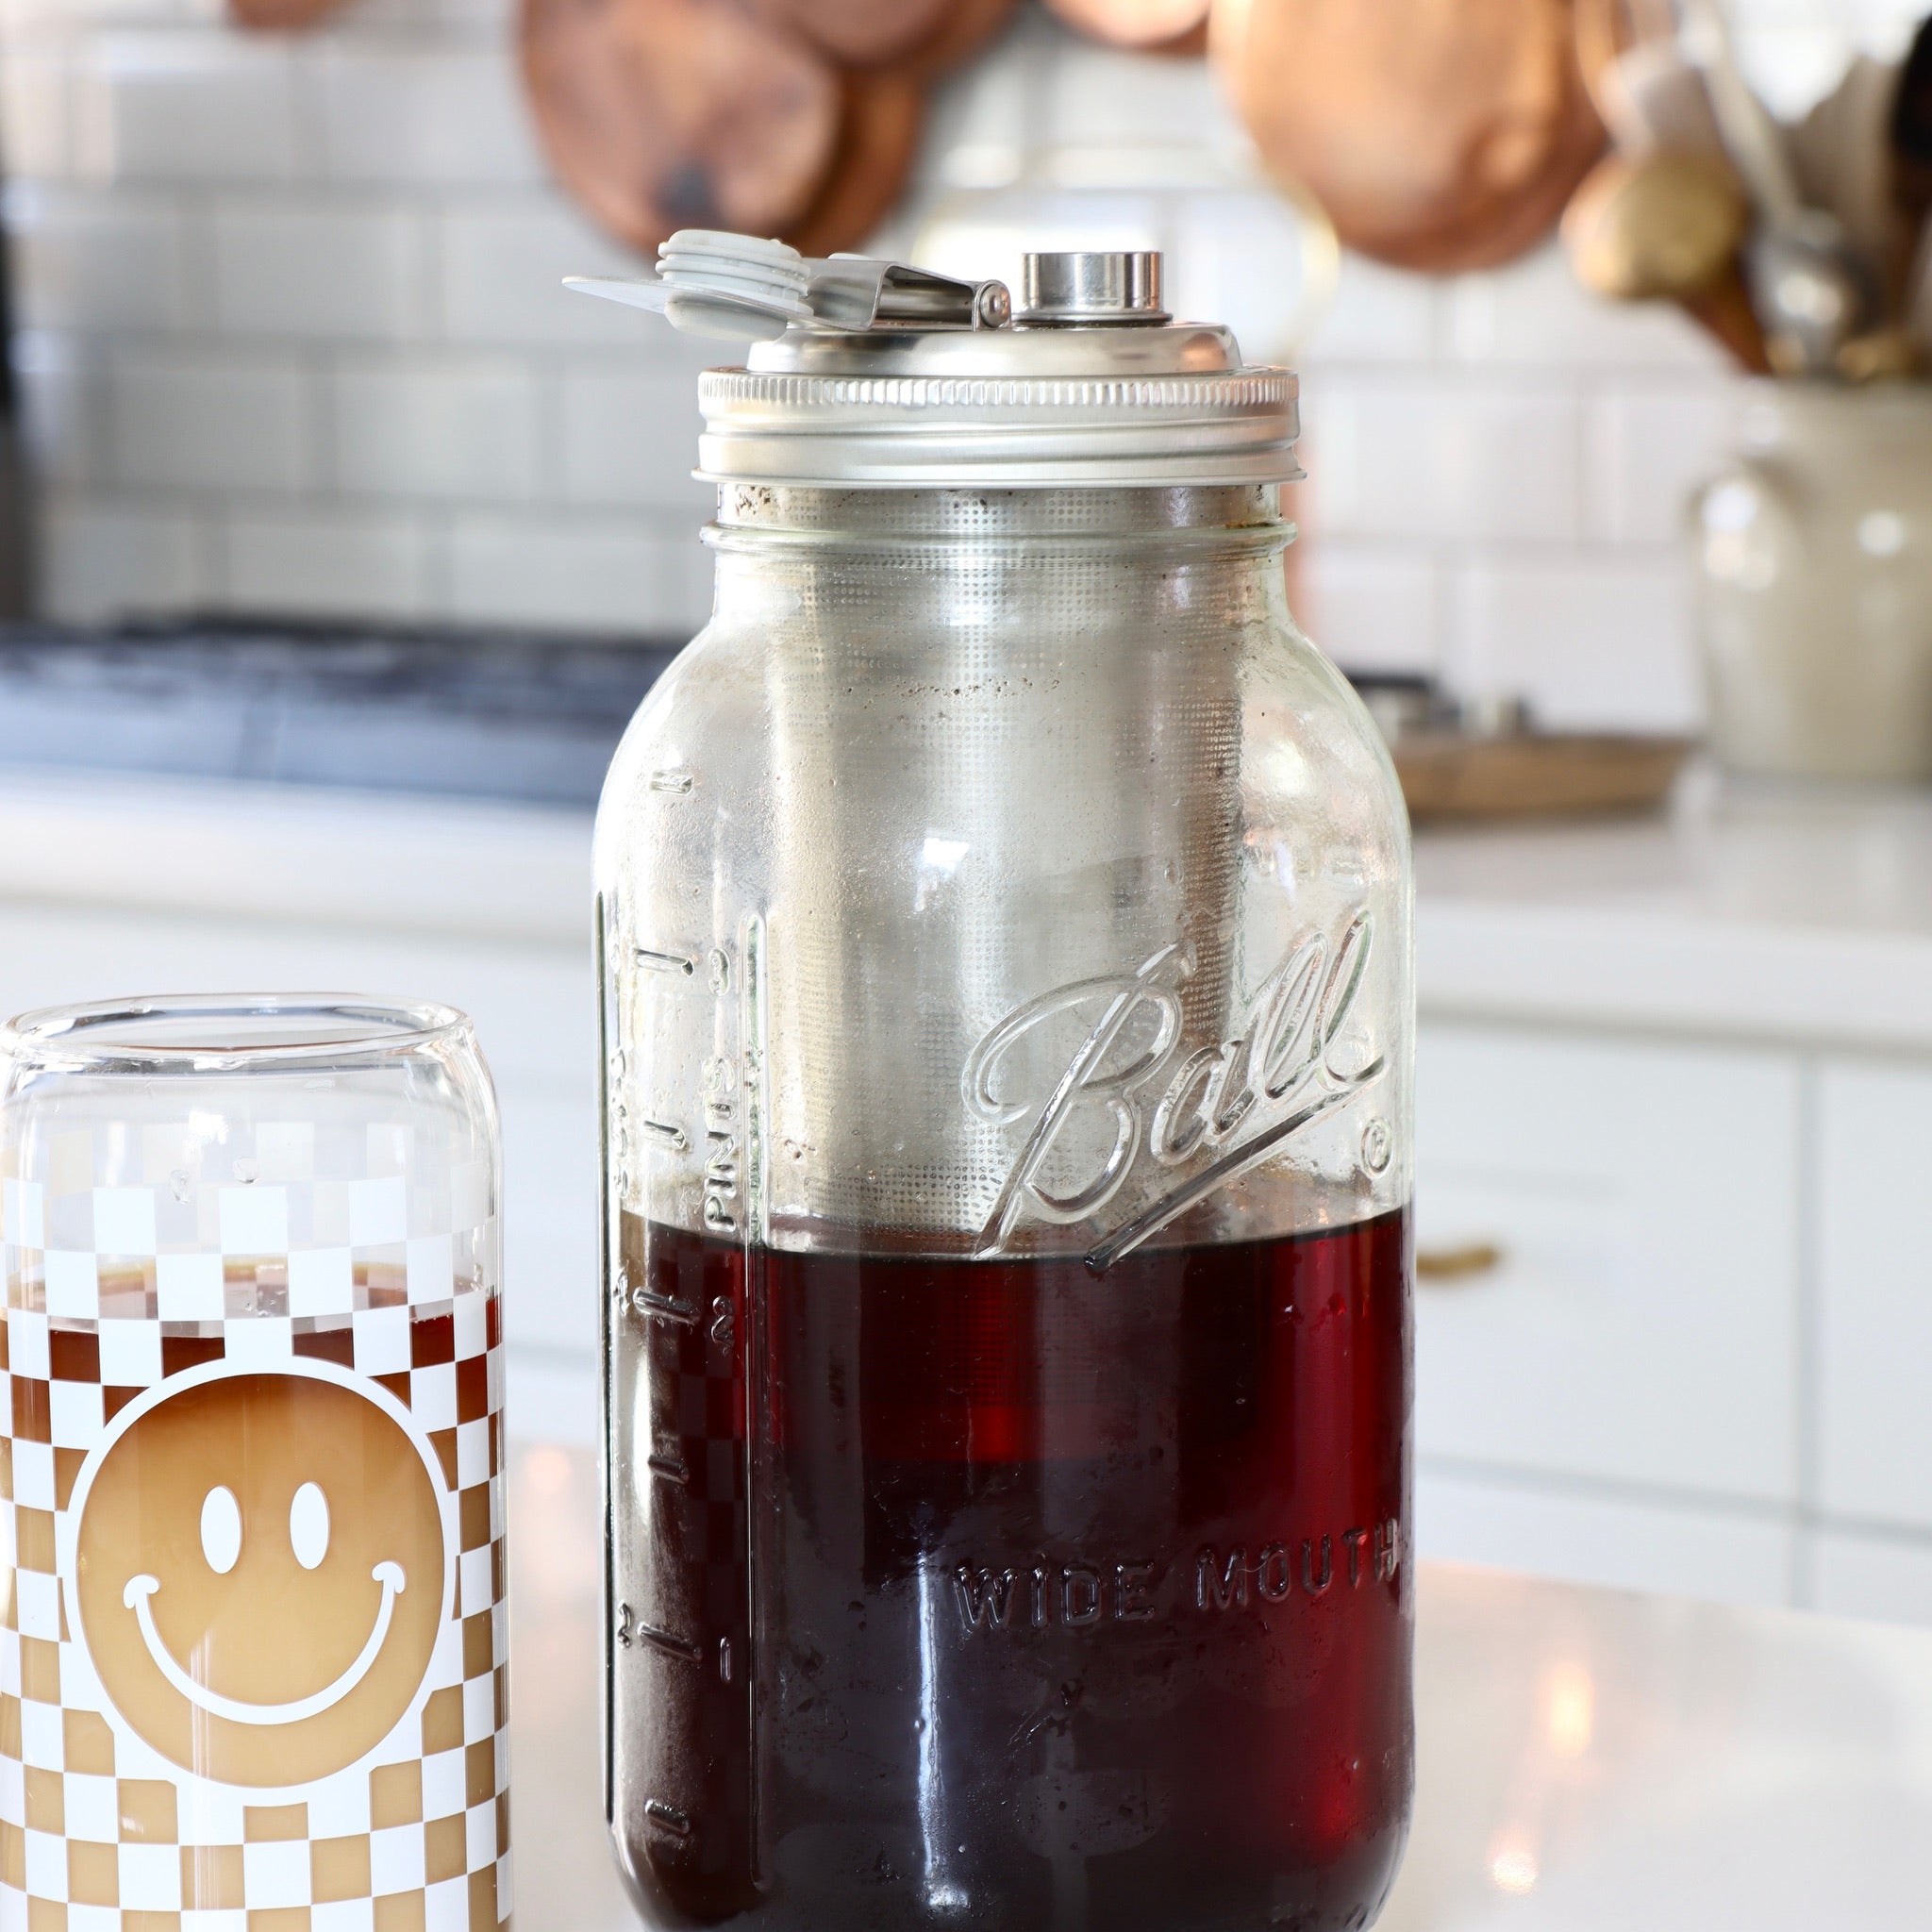 Jar ware Cold Brew/Tea Infuser – CCmarketplace